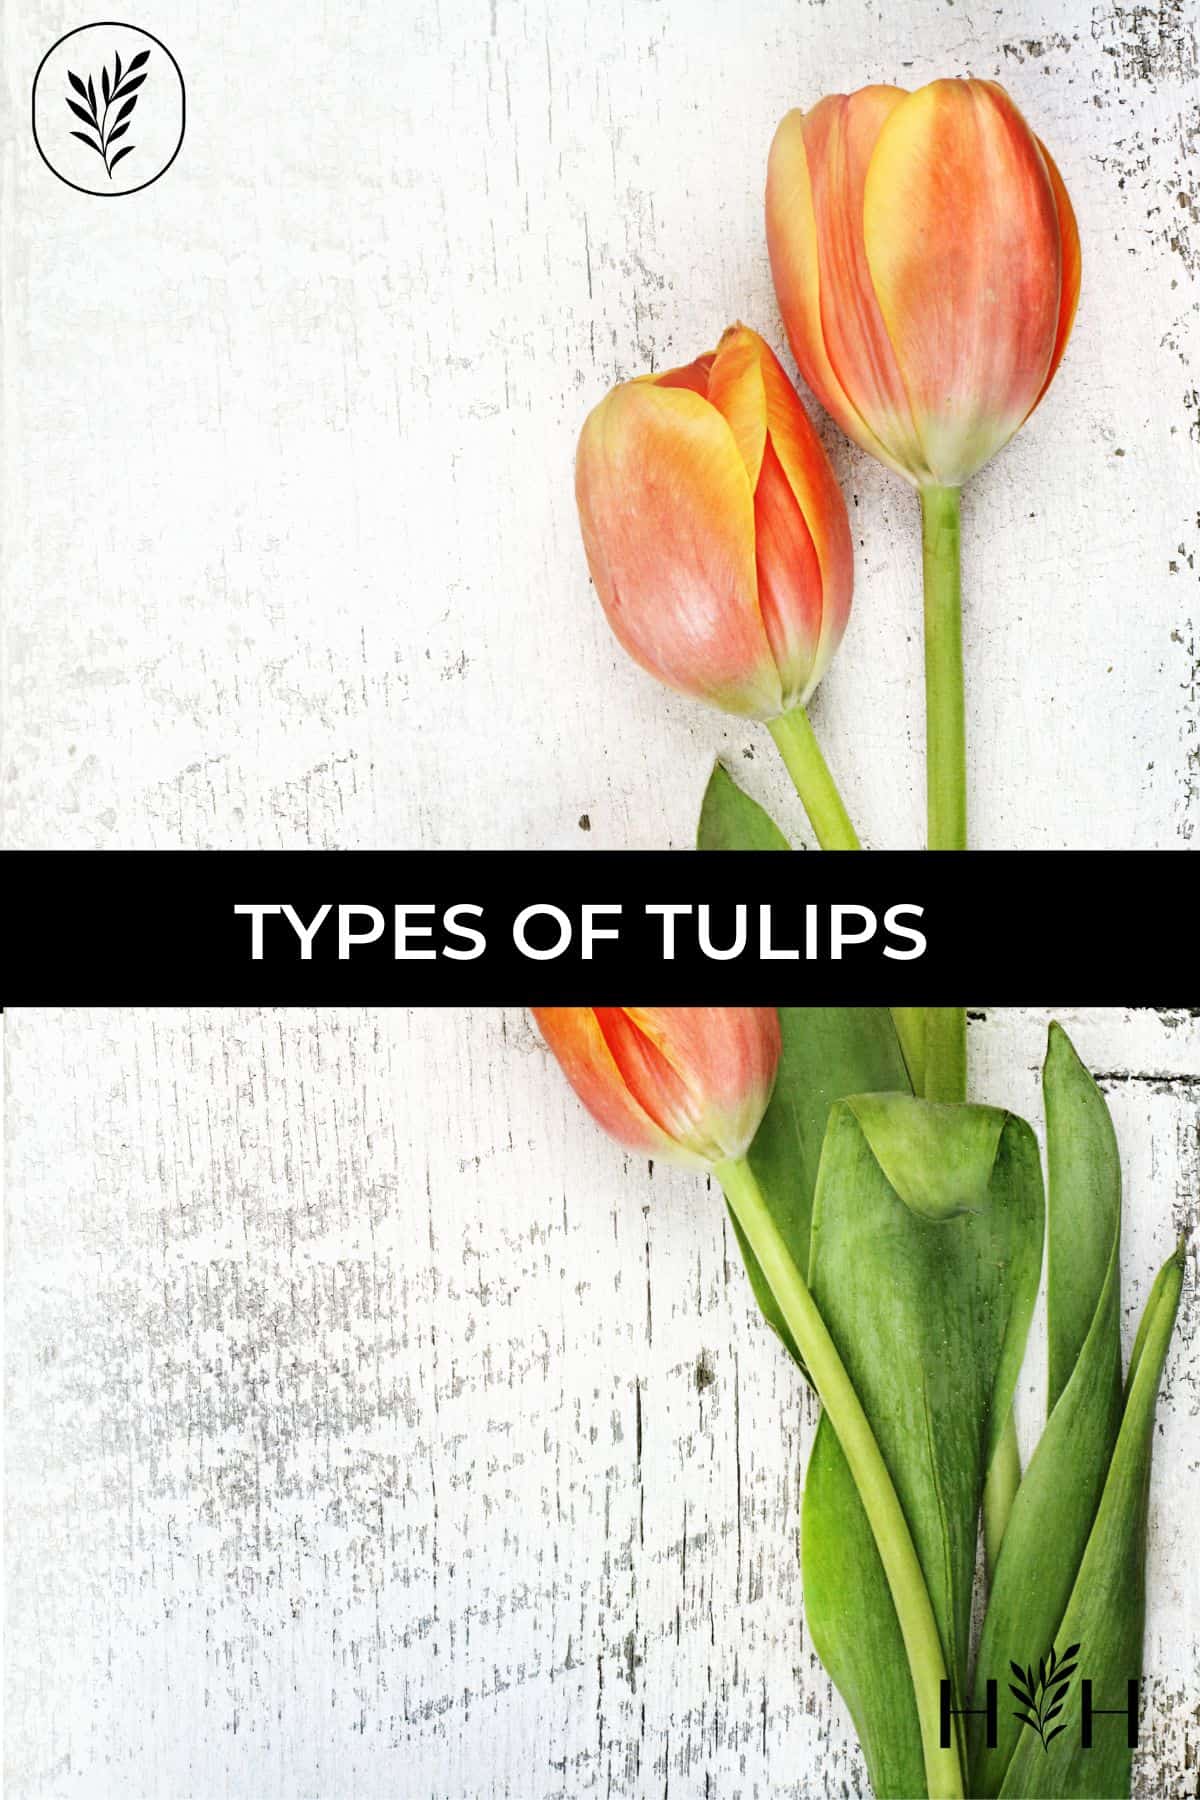 Types of tulips via @home4theharvest